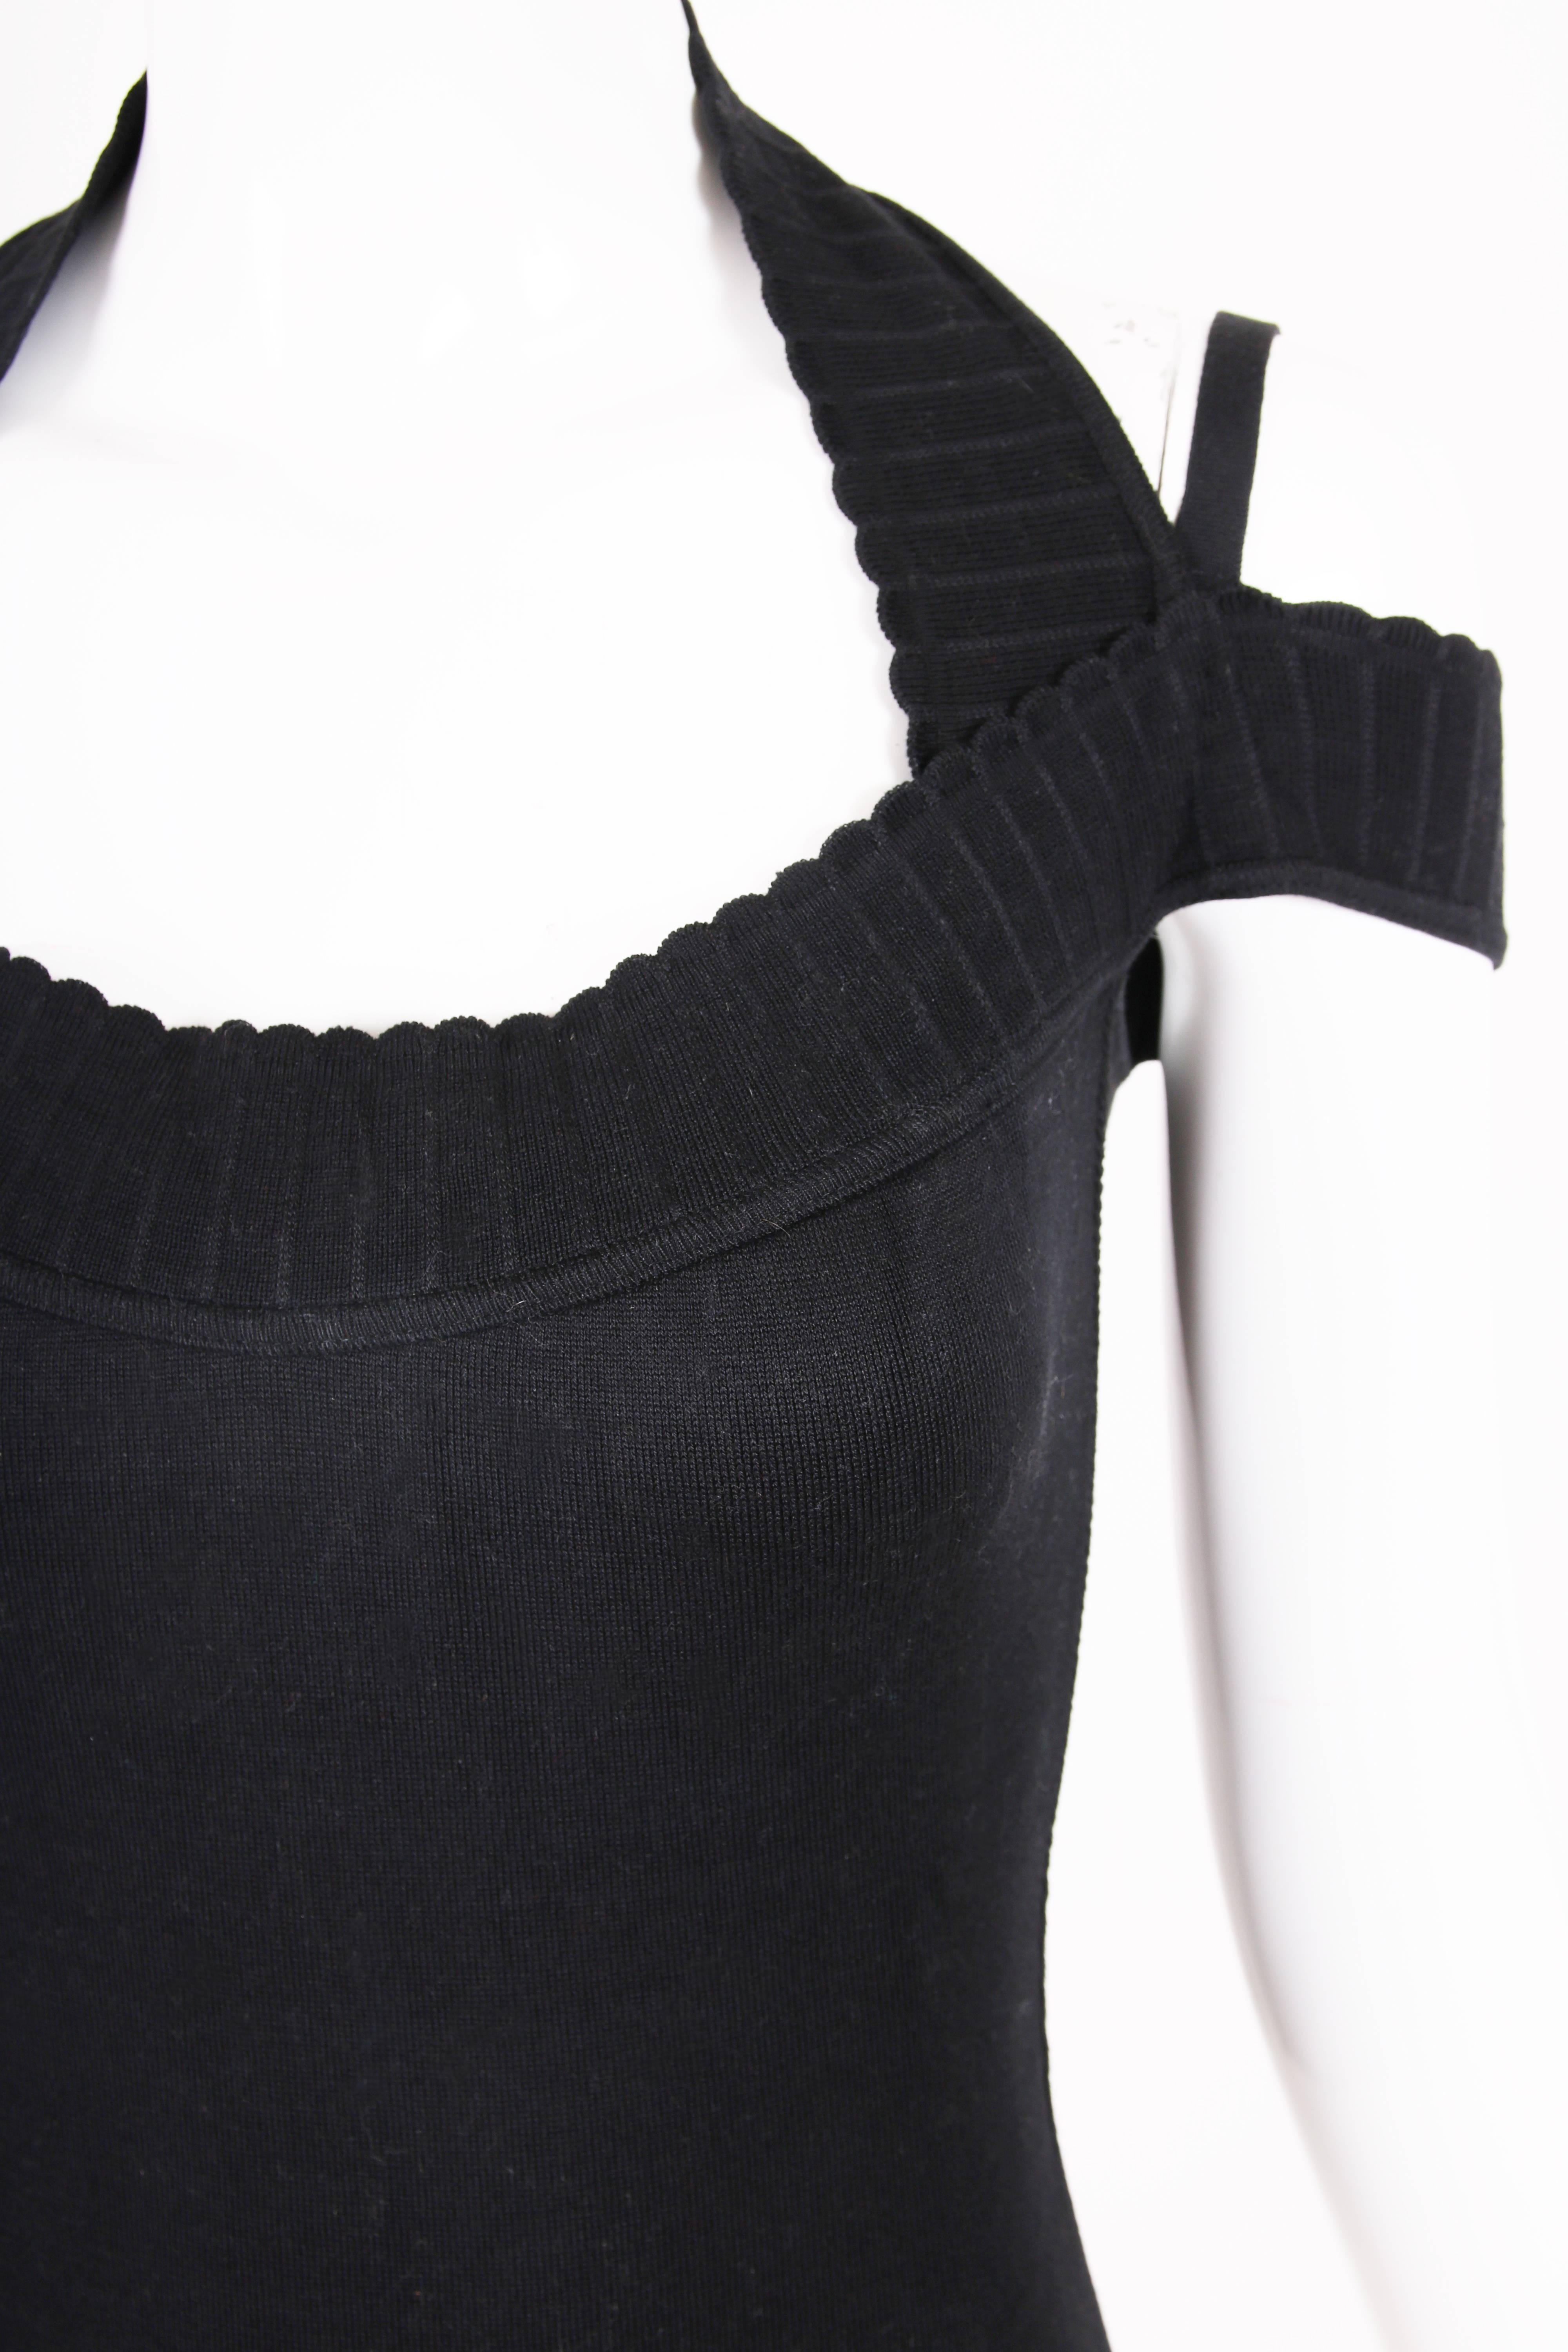 Alaia Black Halter Stretch Bodysuit W/Scallop Hem In Excellent Condition For Sale In Studio City, CA